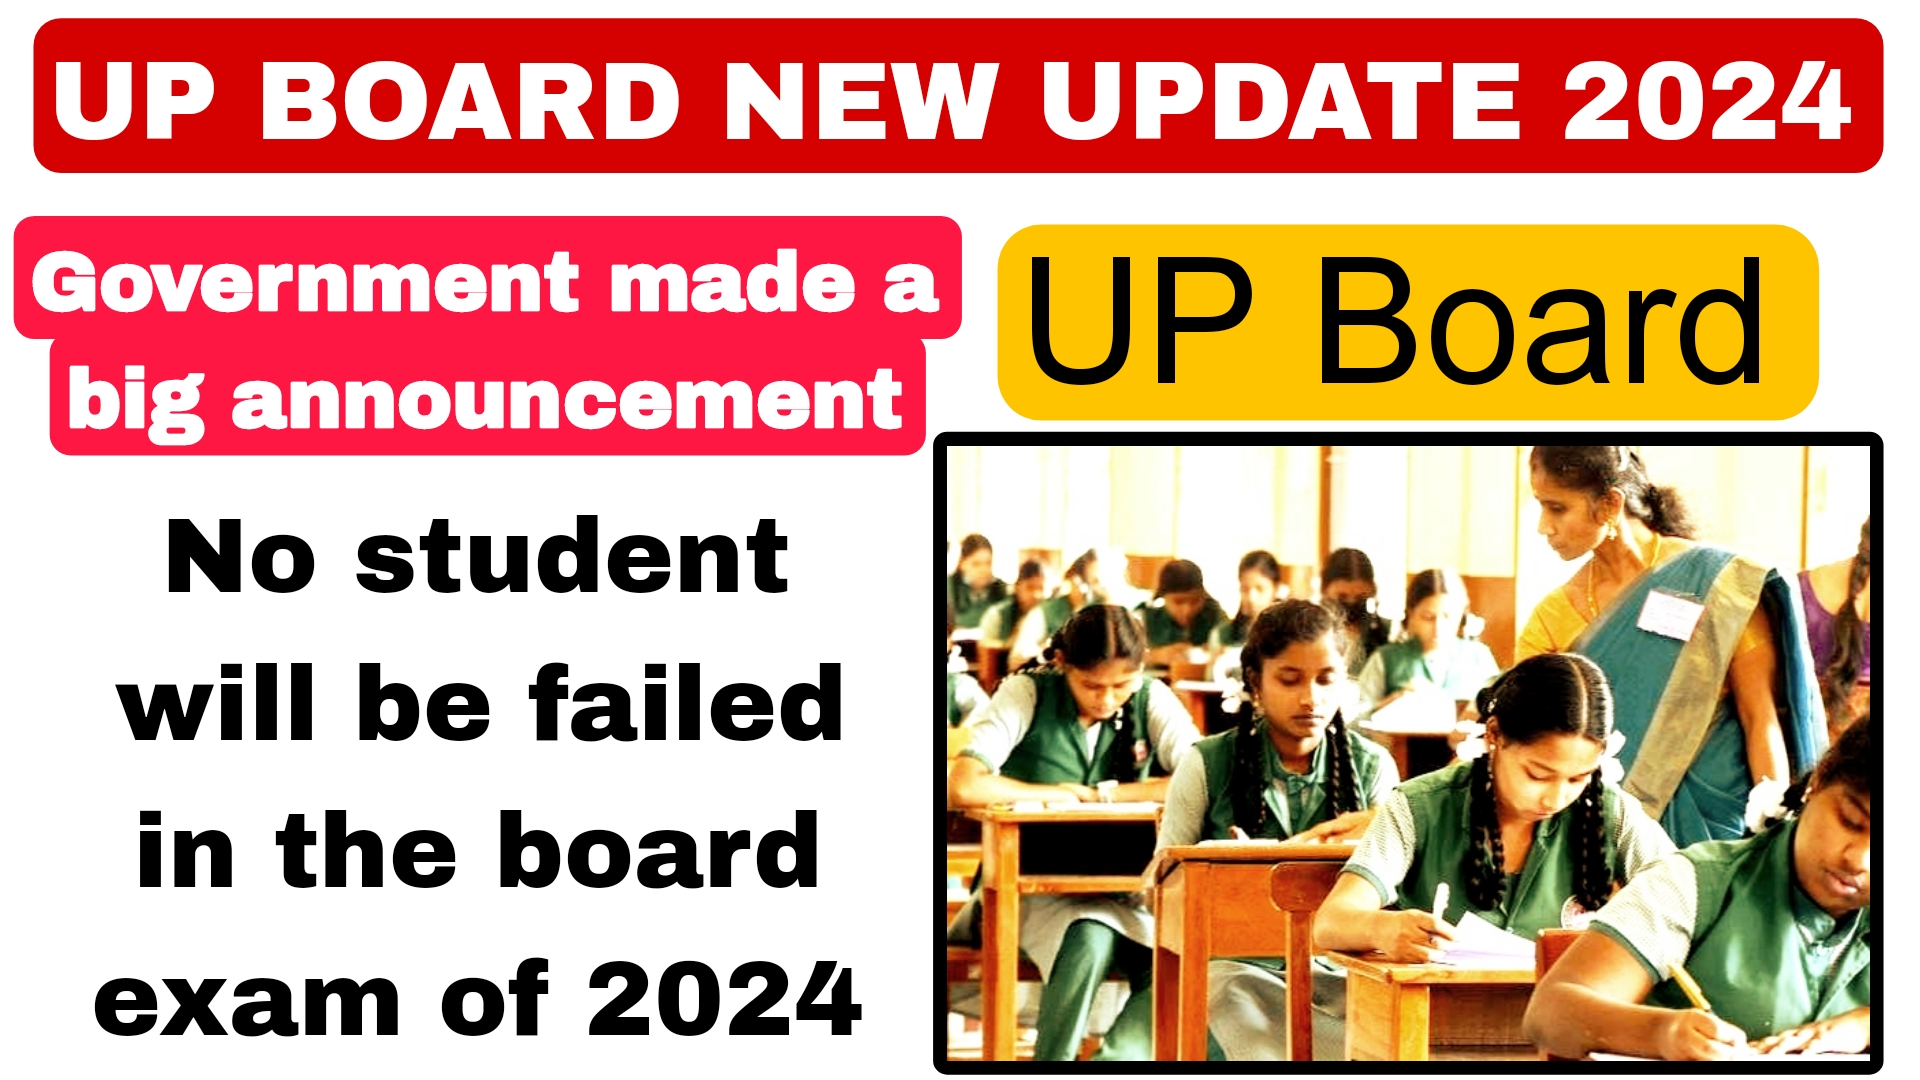 UP Board New Update 2024